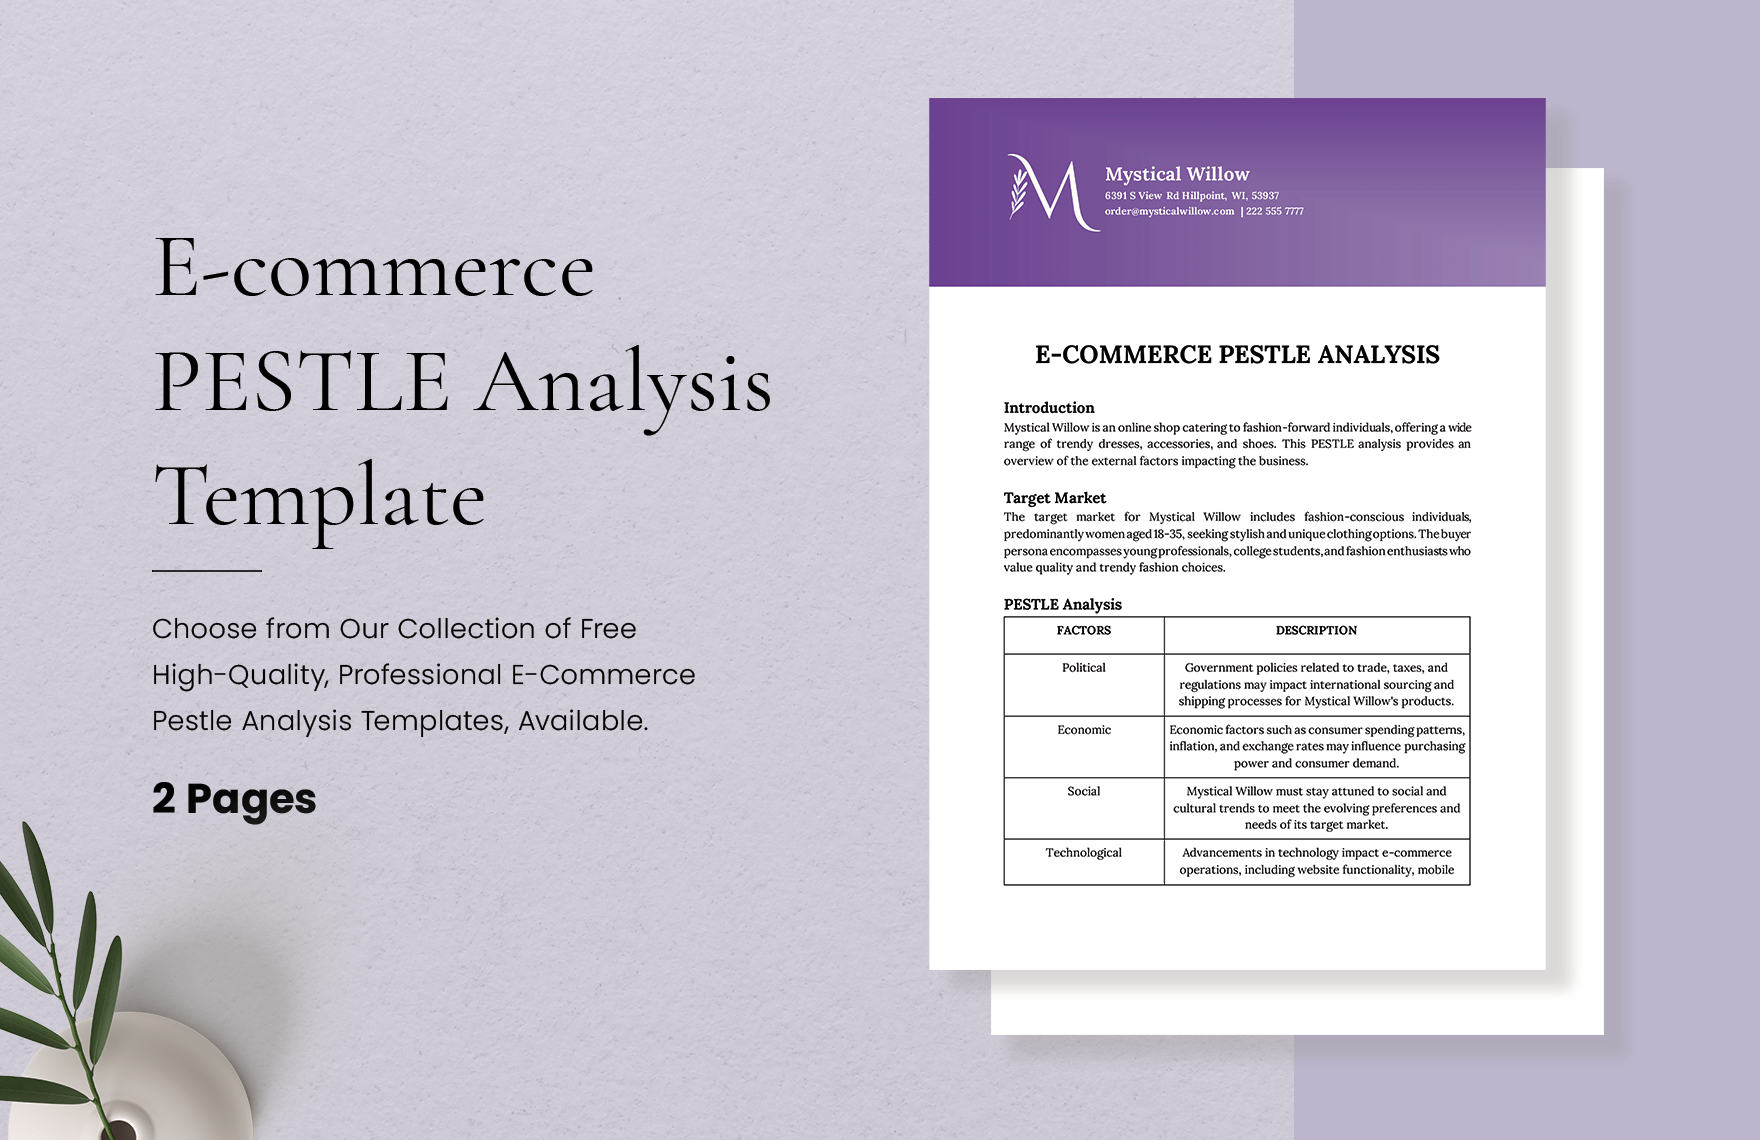 E-commerce PESTLE Analysis Template